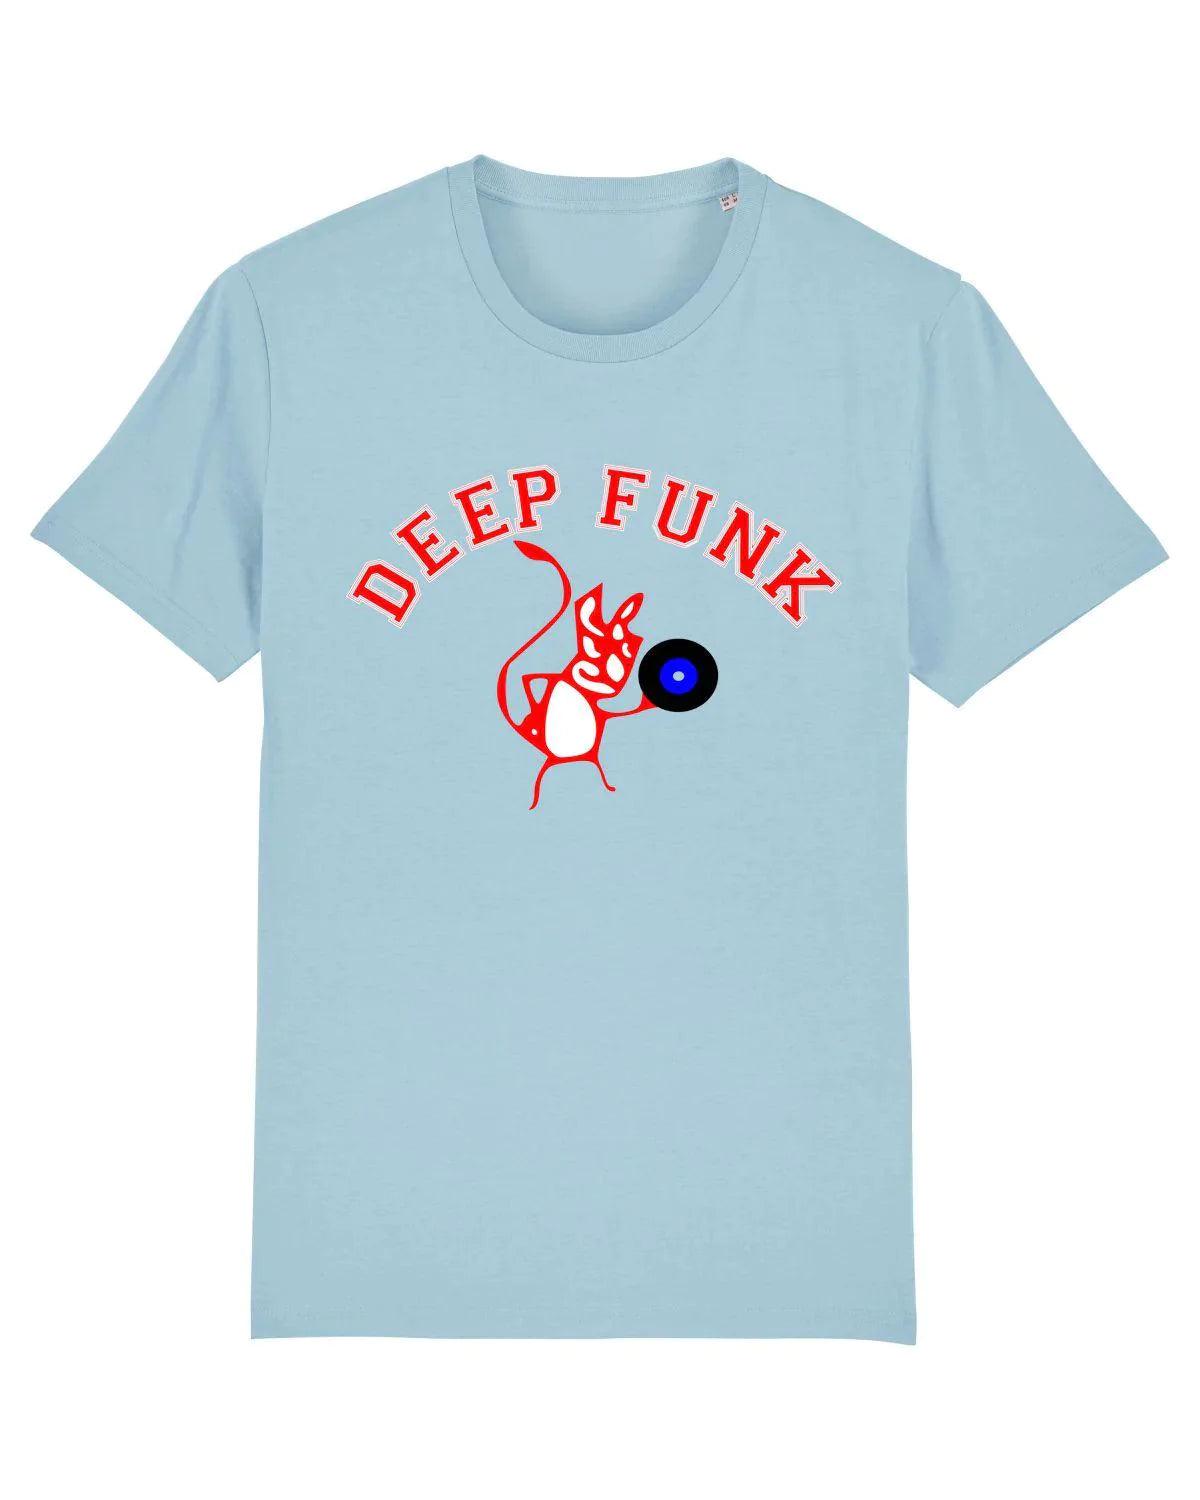 DEEP FUNK DEVIL (Many Colours): Official Keb Darge T-Shirt - SOUND IS COLOUR